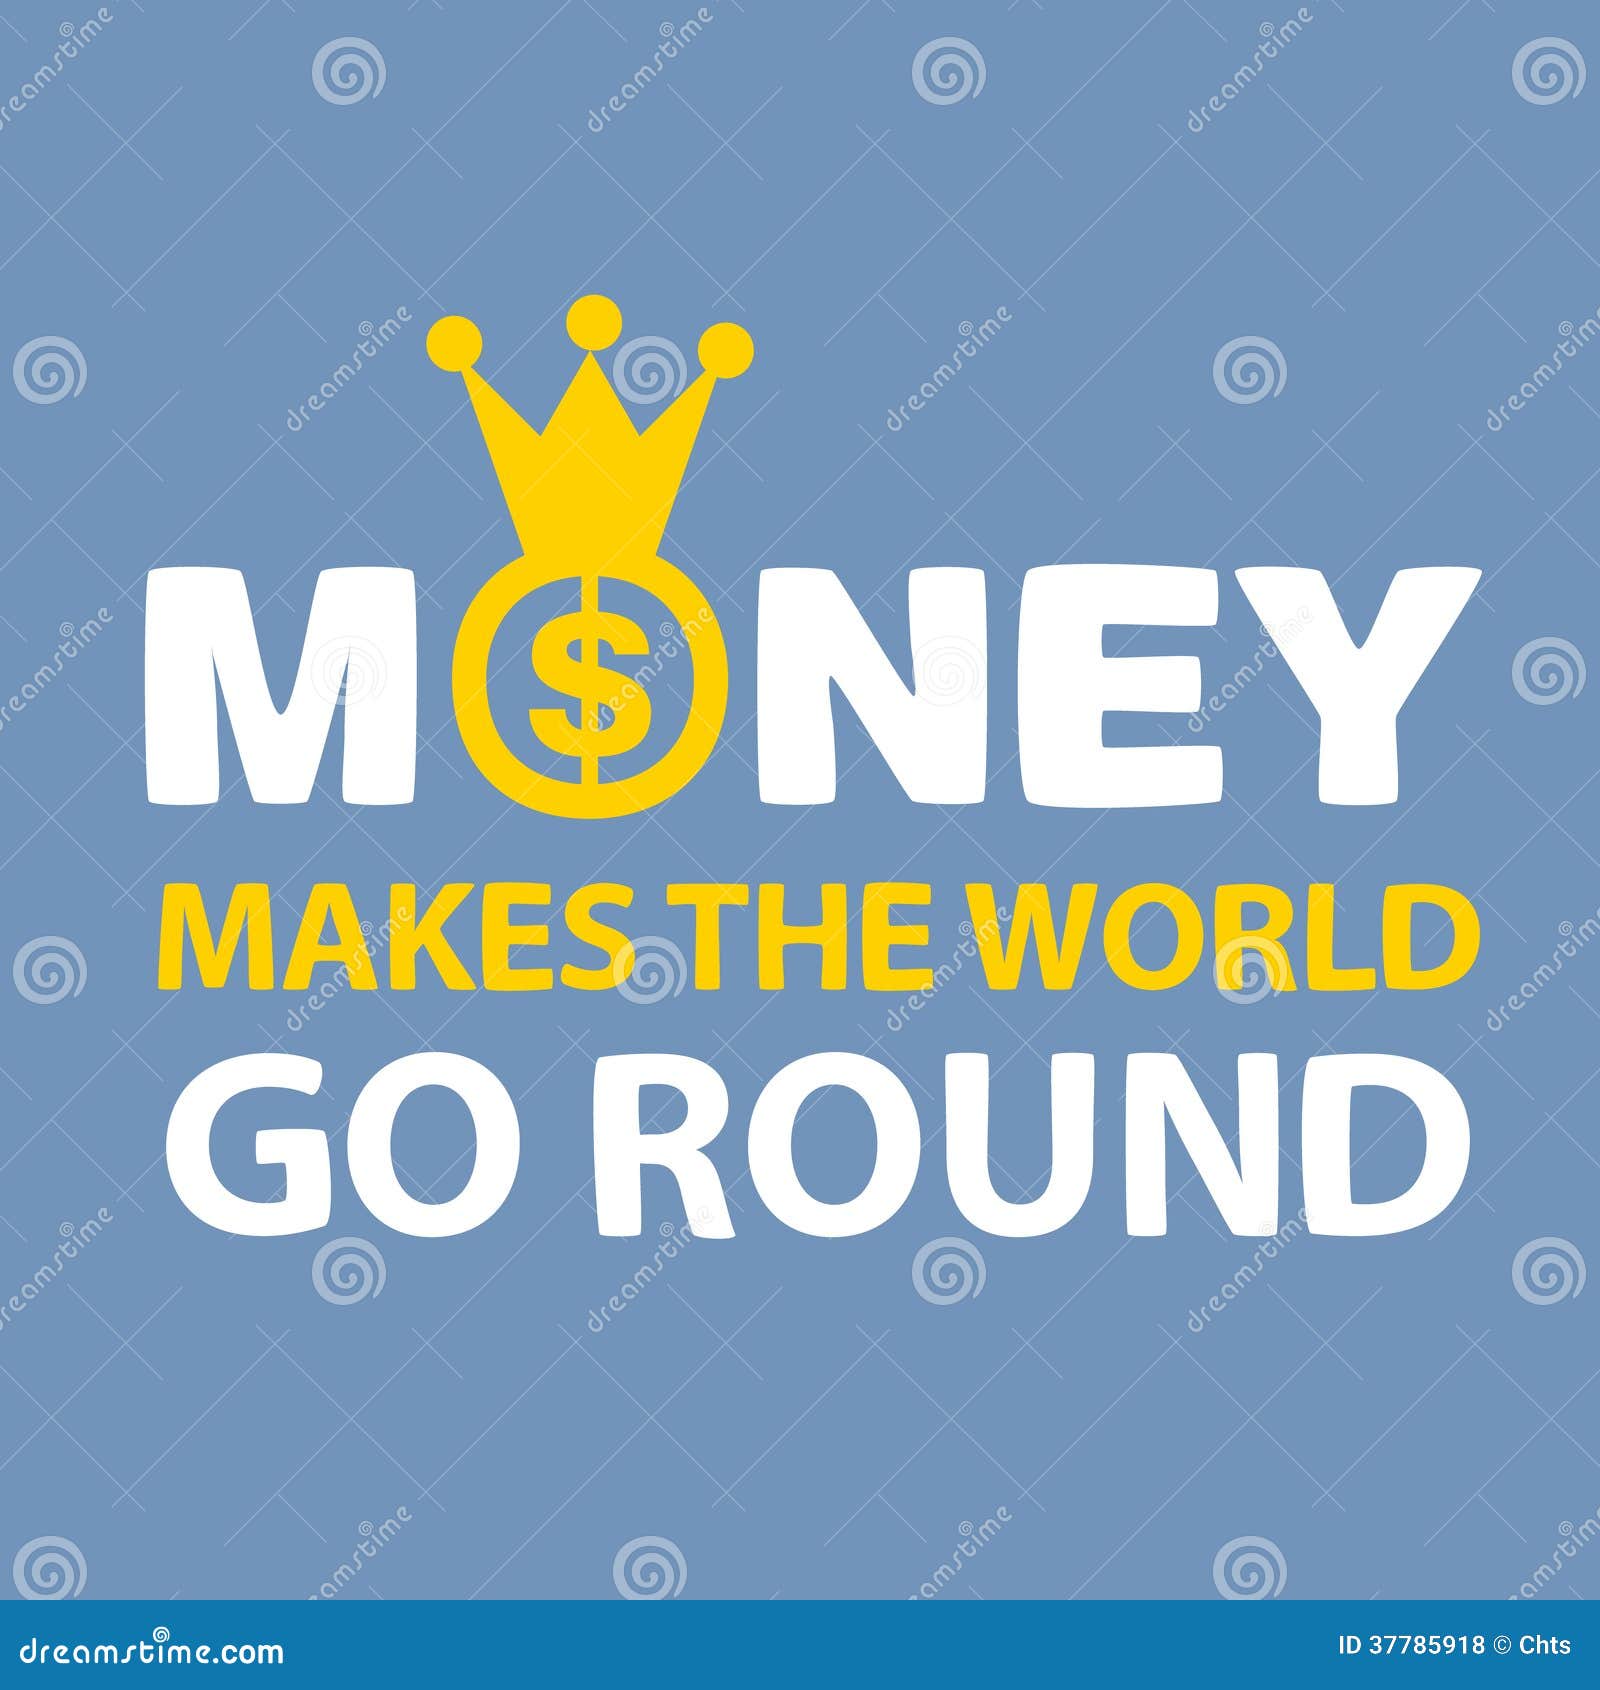 money make the world go round song download